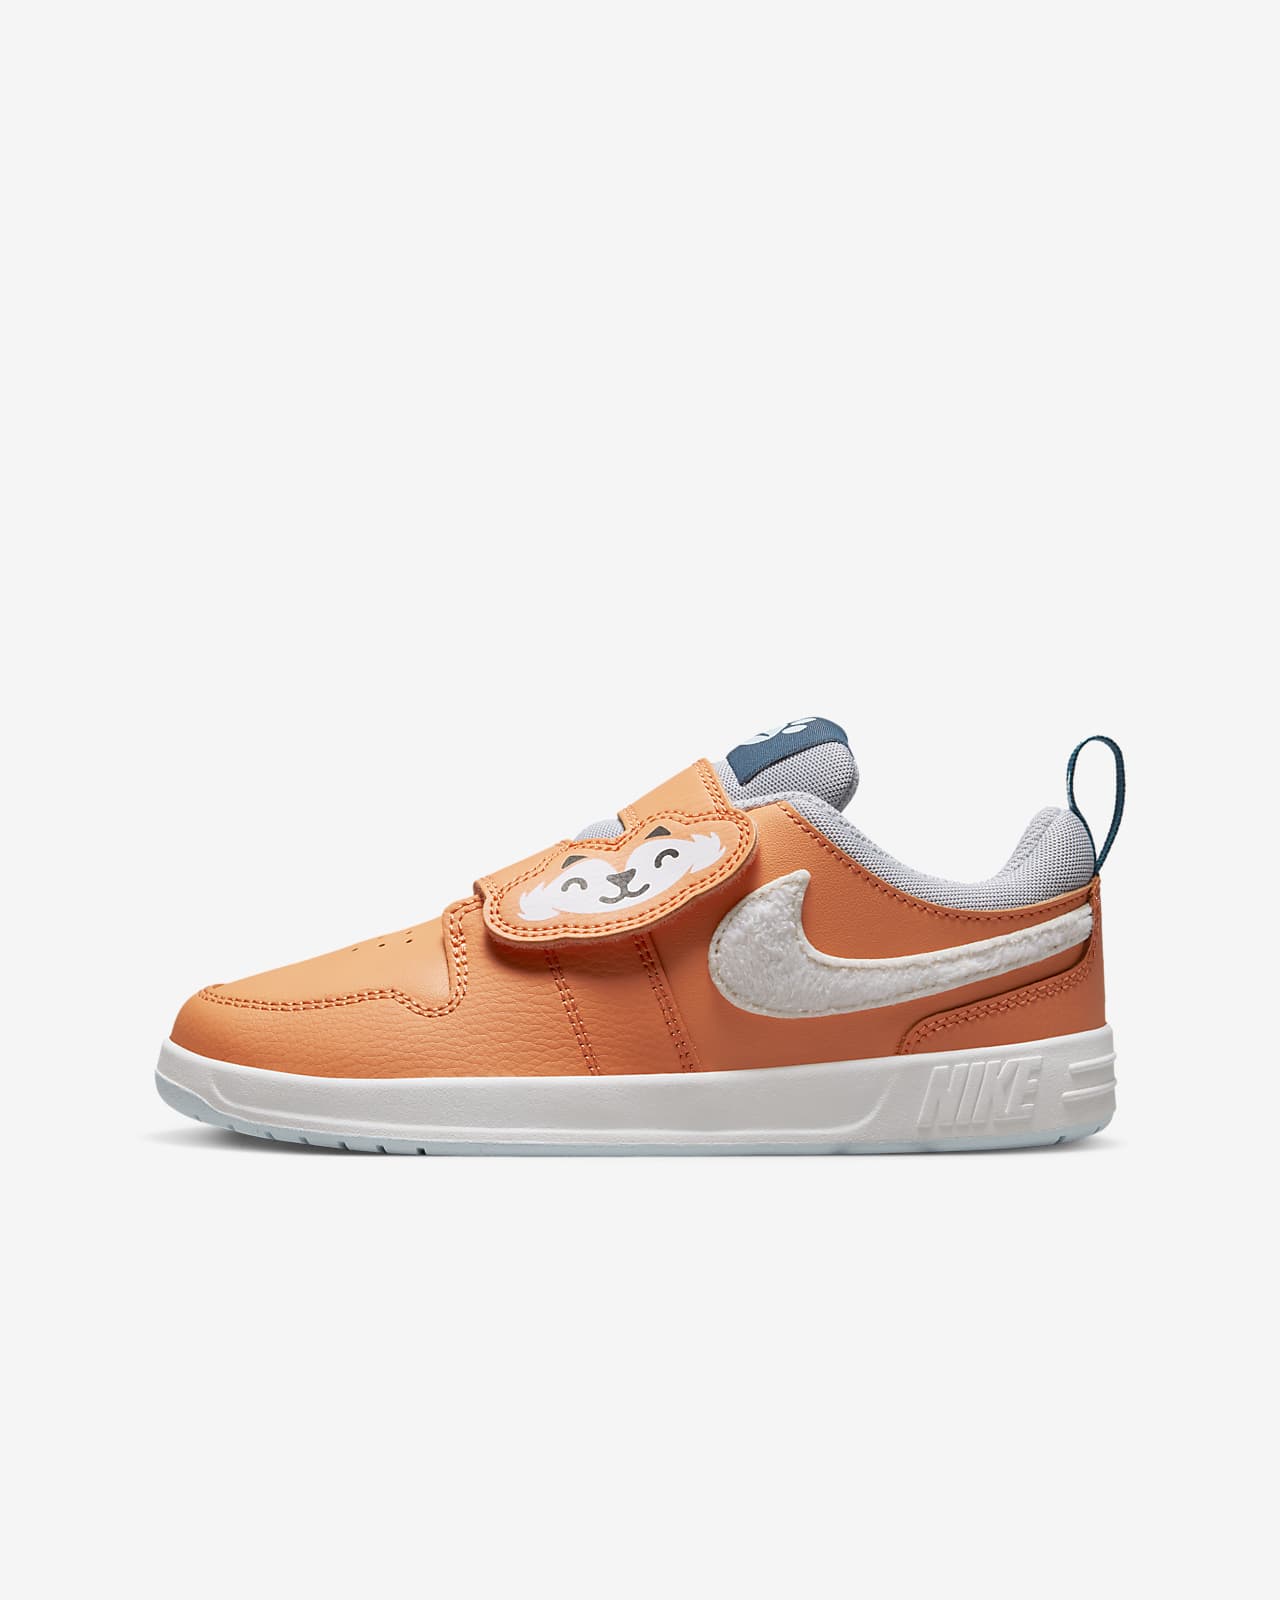 Nike Pico 5 Lil Schuh für jüngere Kinder